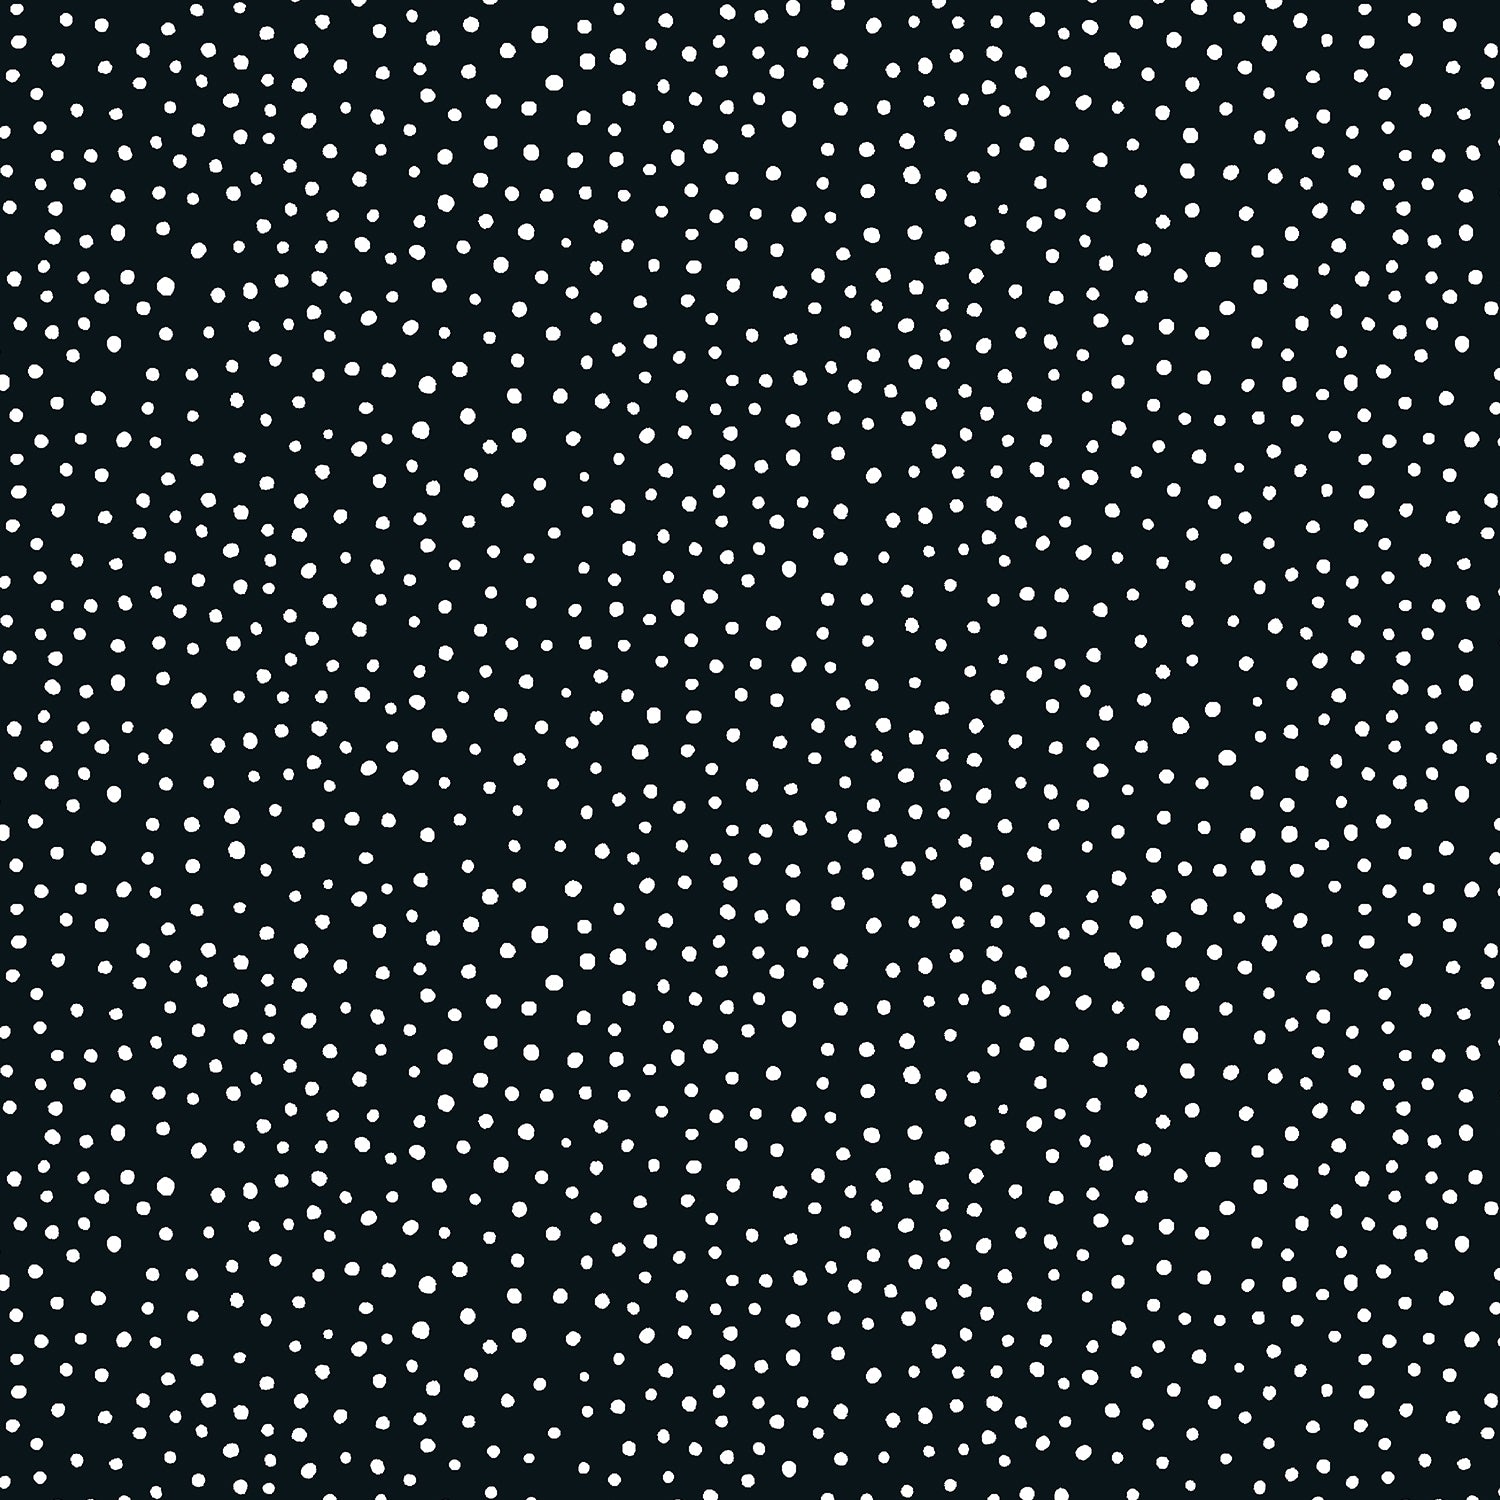 Happiest Dots - Black Fabric